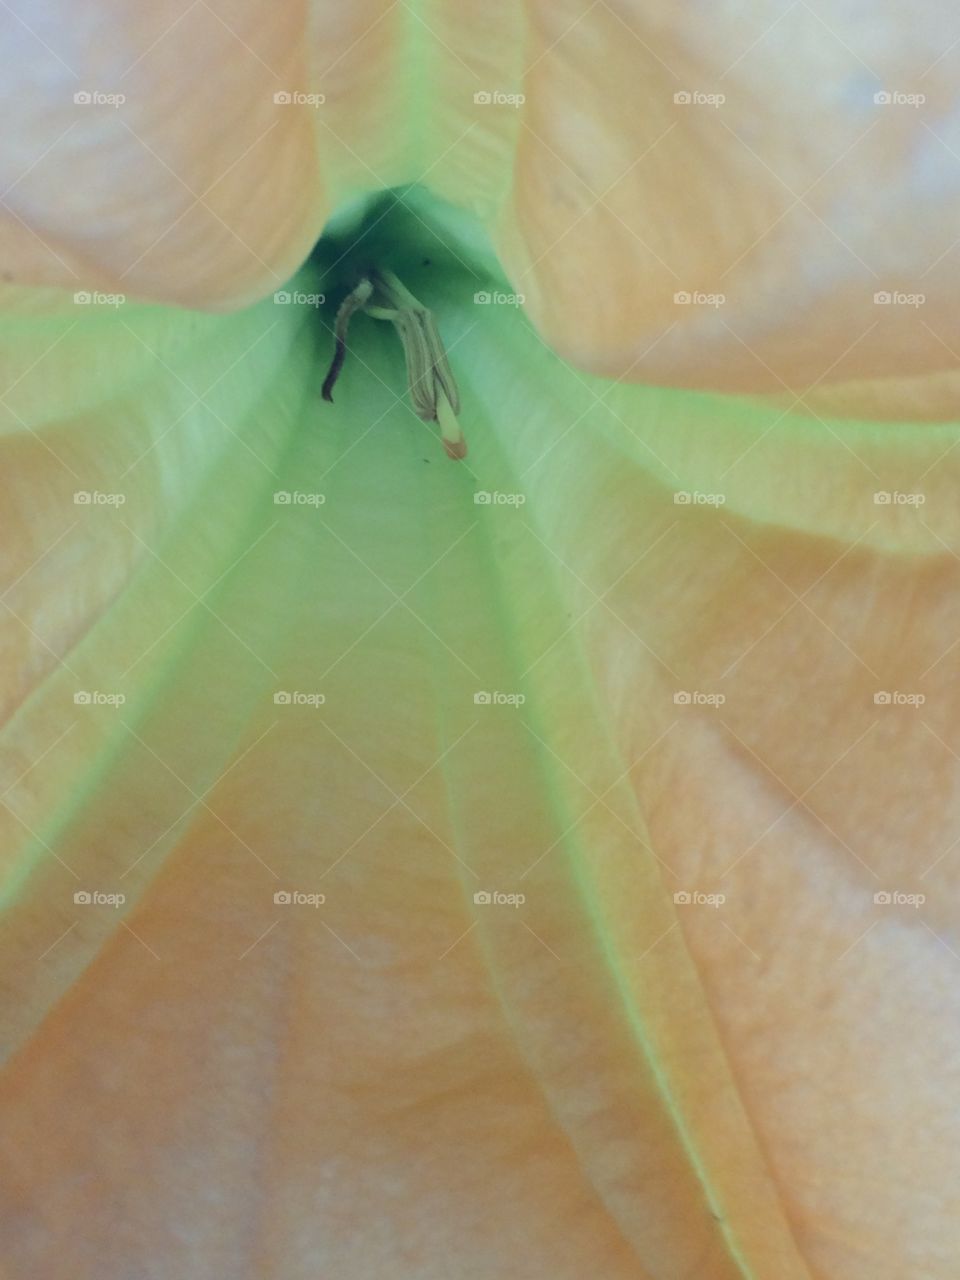 Up close inside a flower.